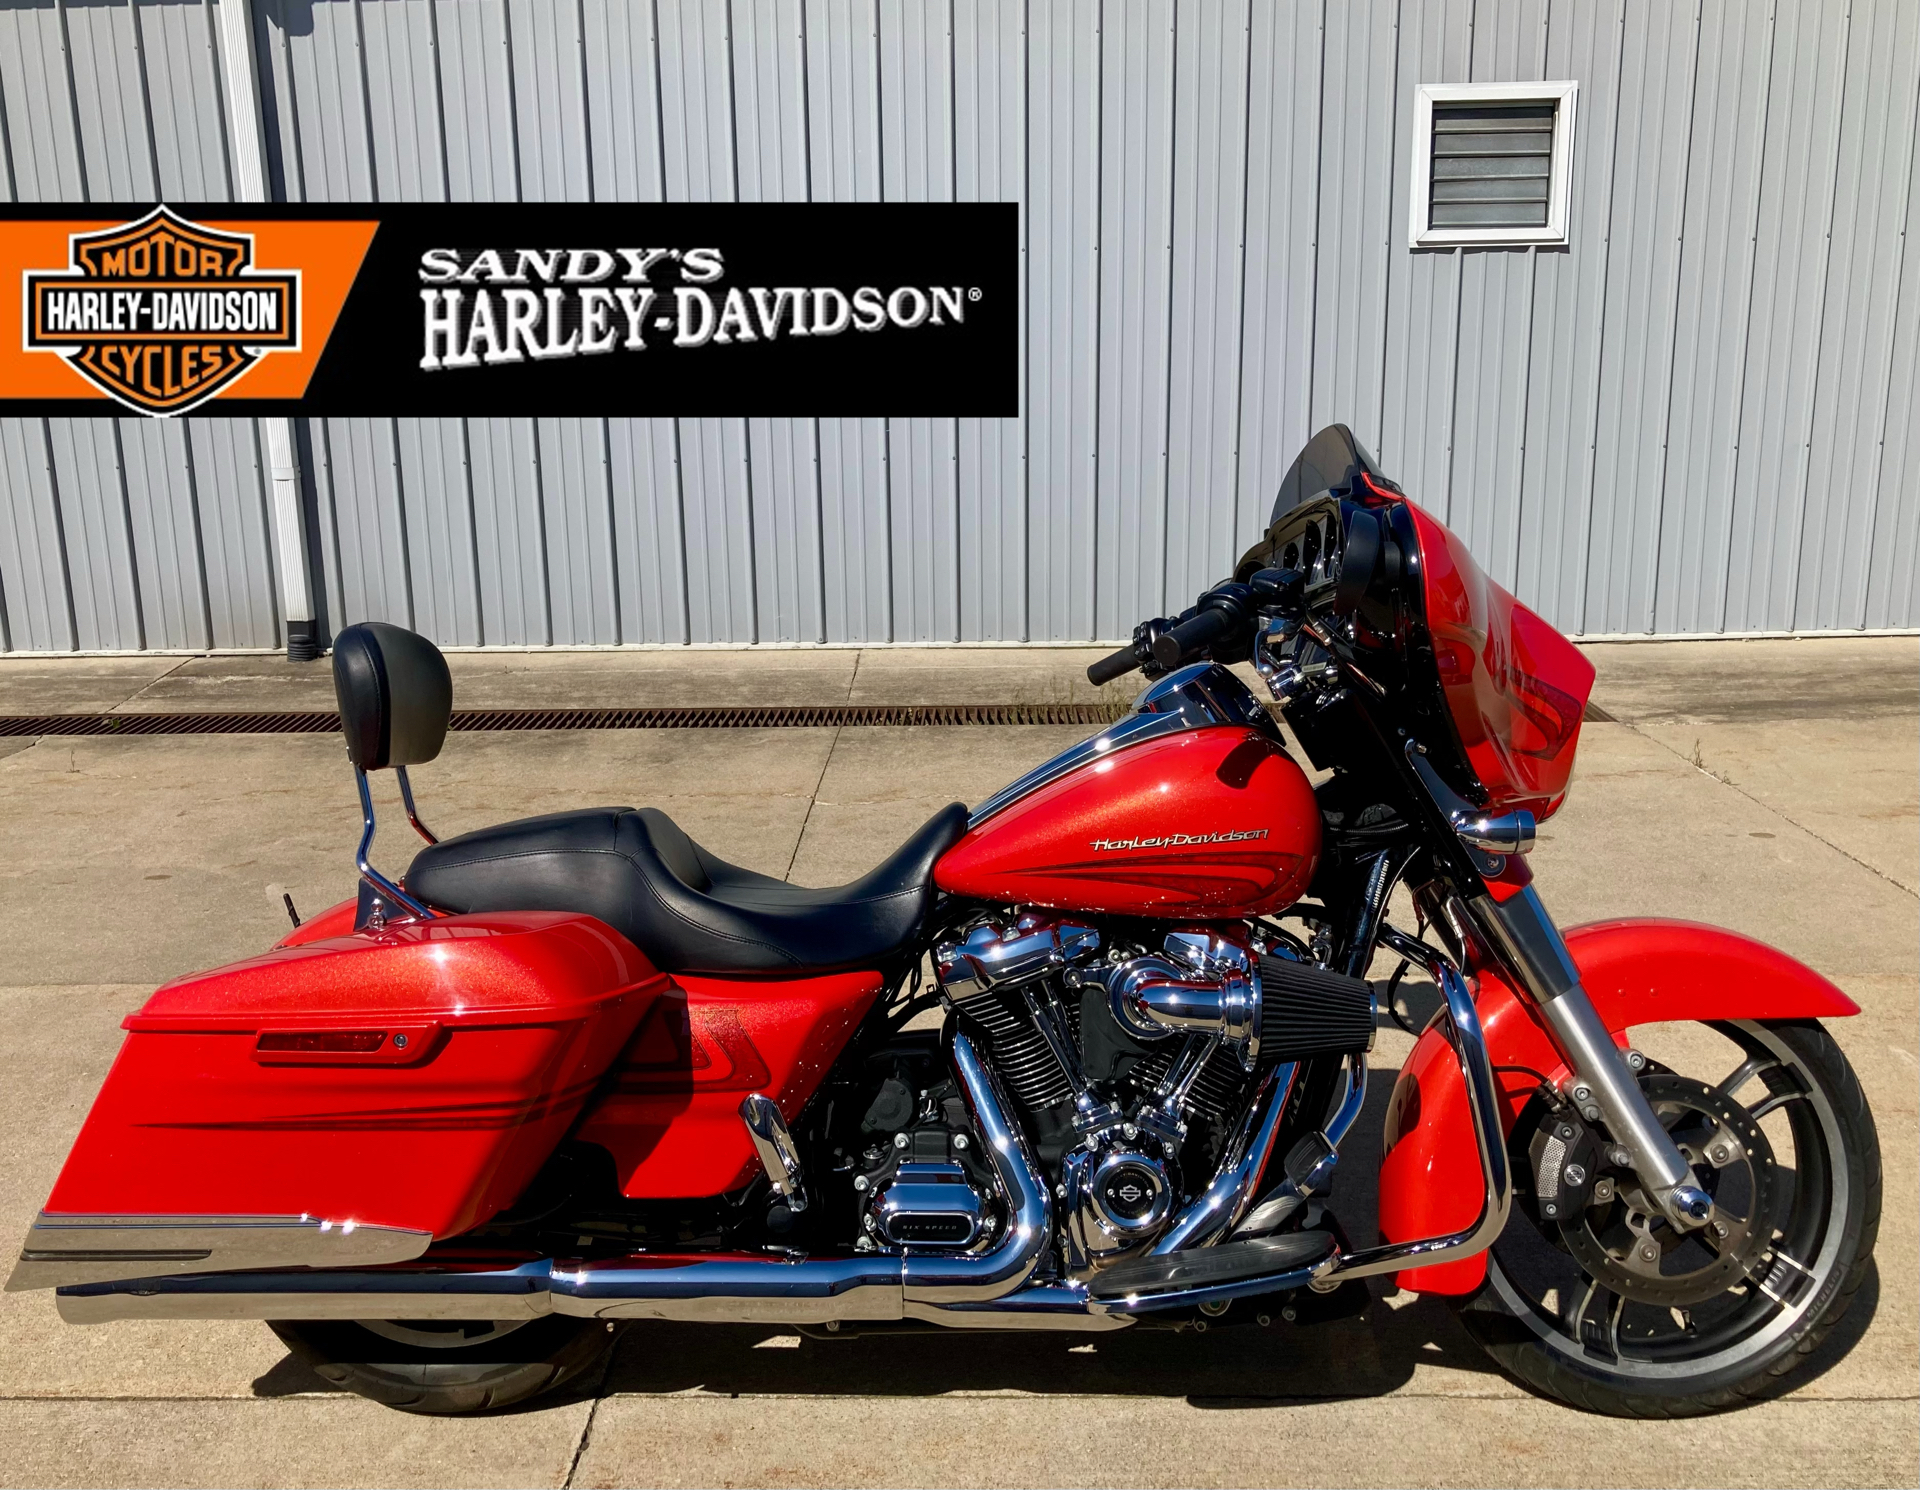 2017 Harley-Davidson Street Glide® Special in Fremont, Michigan - Photo 1